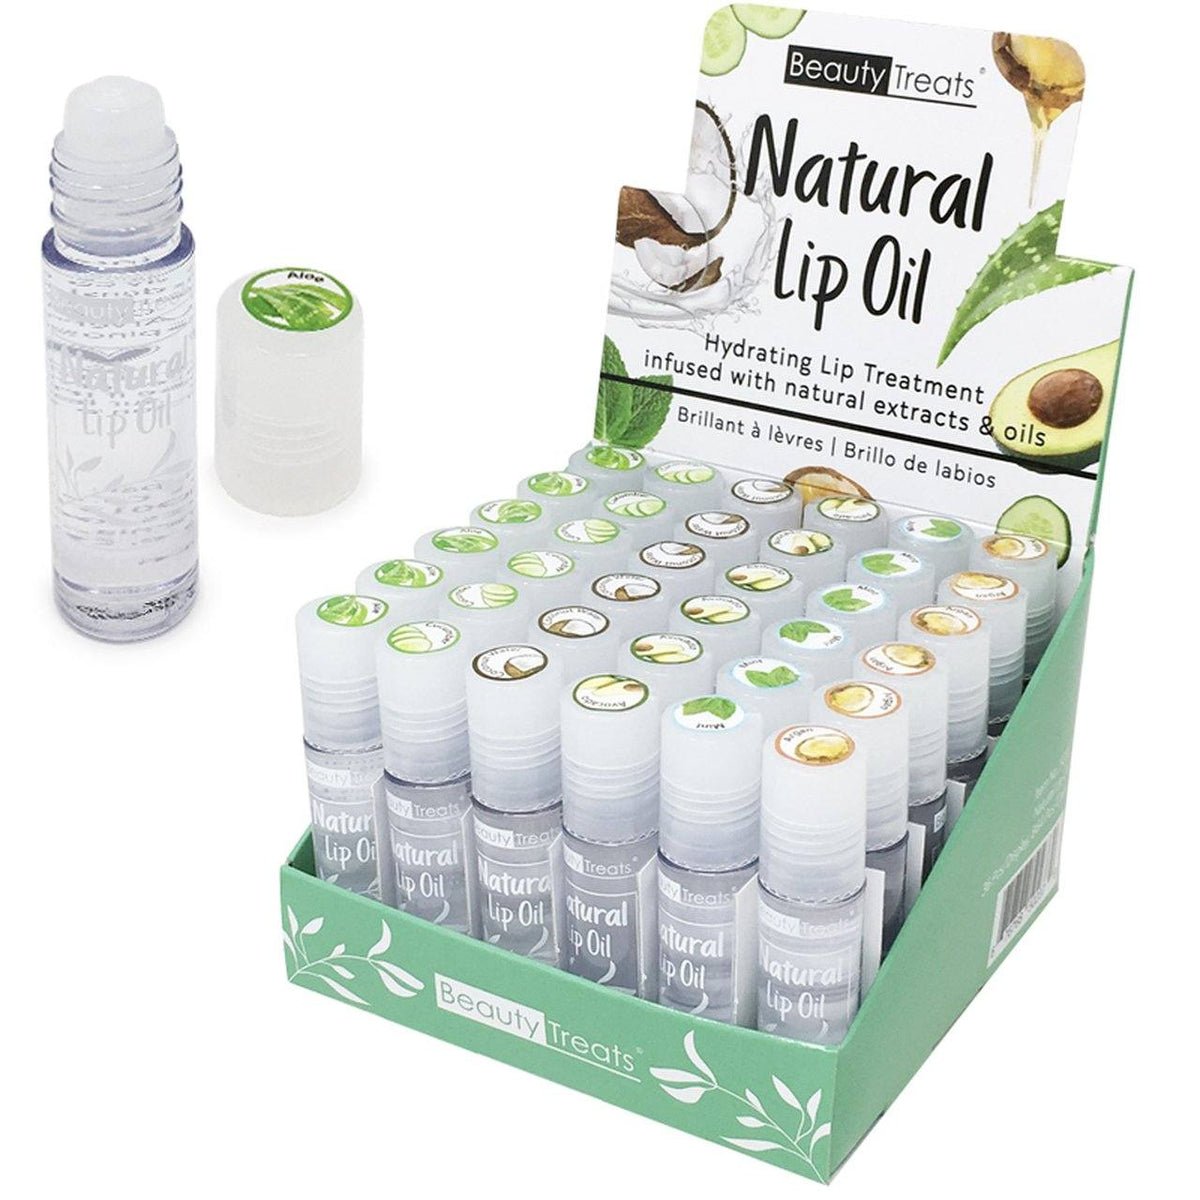 Beauty Treats Natural Lip Oil